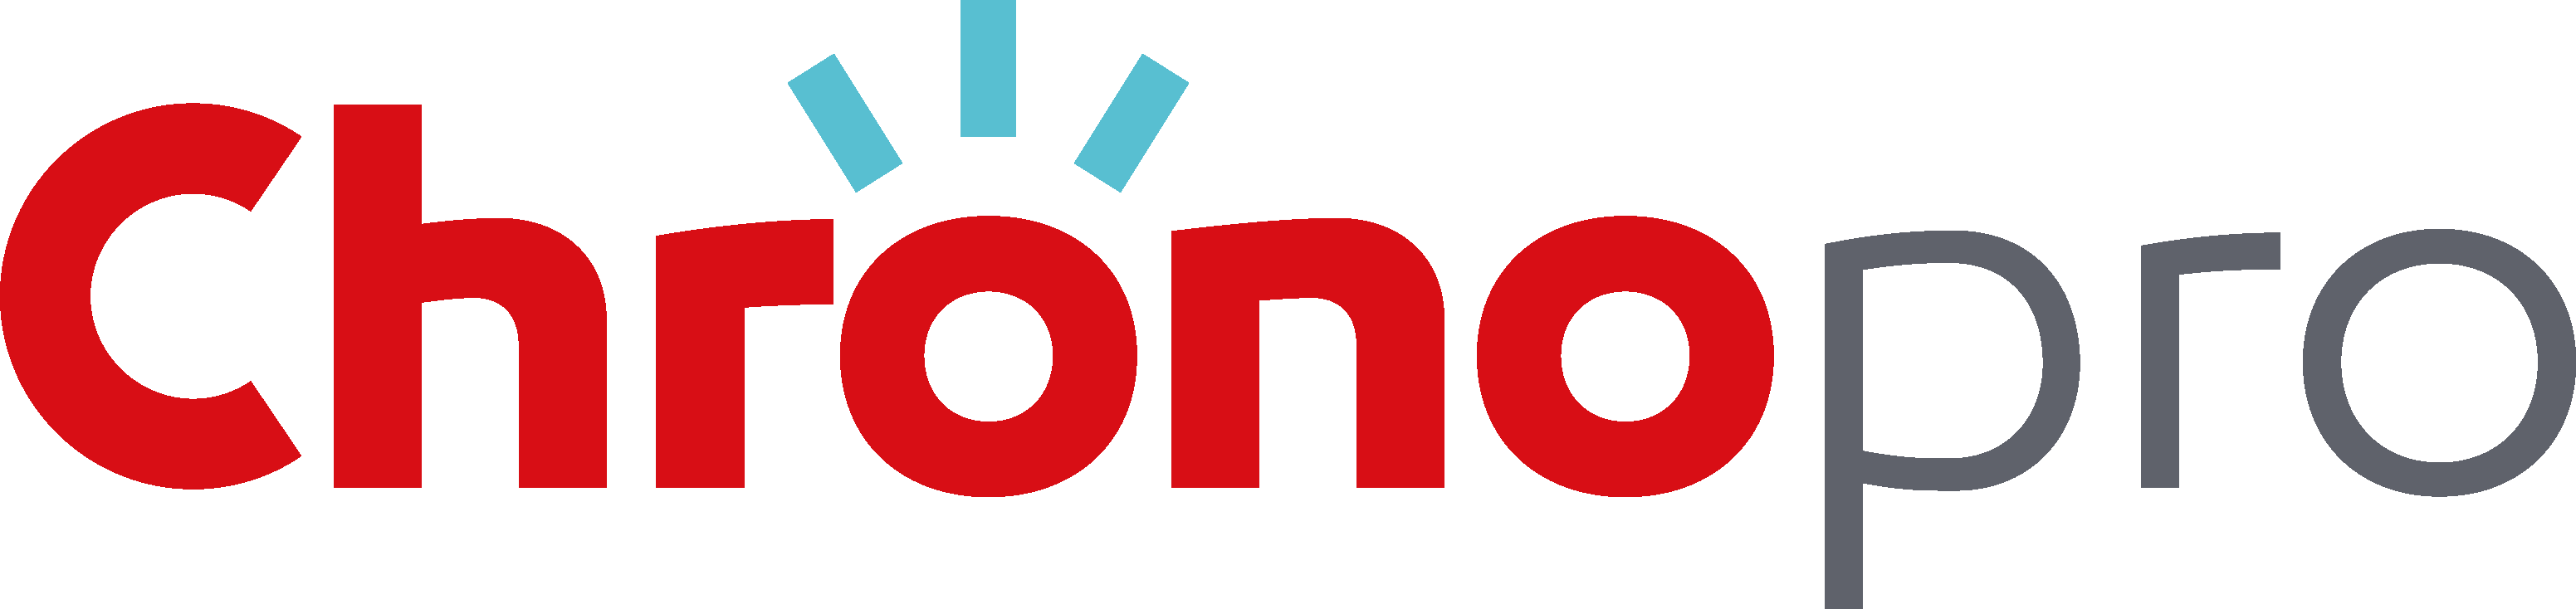 Logo Chronopro